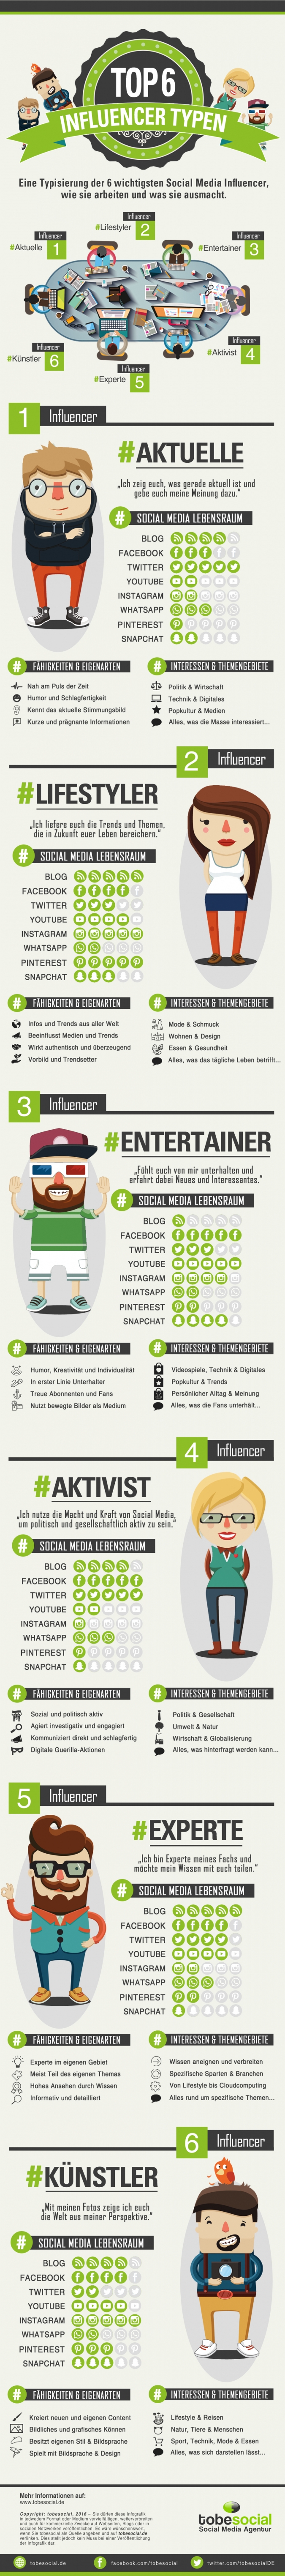 infografik-influencer-marketing-top-meinunsgfuehrer-social-media-agentur-youtube-facebook-instagram-empfehlungsmarketing_0